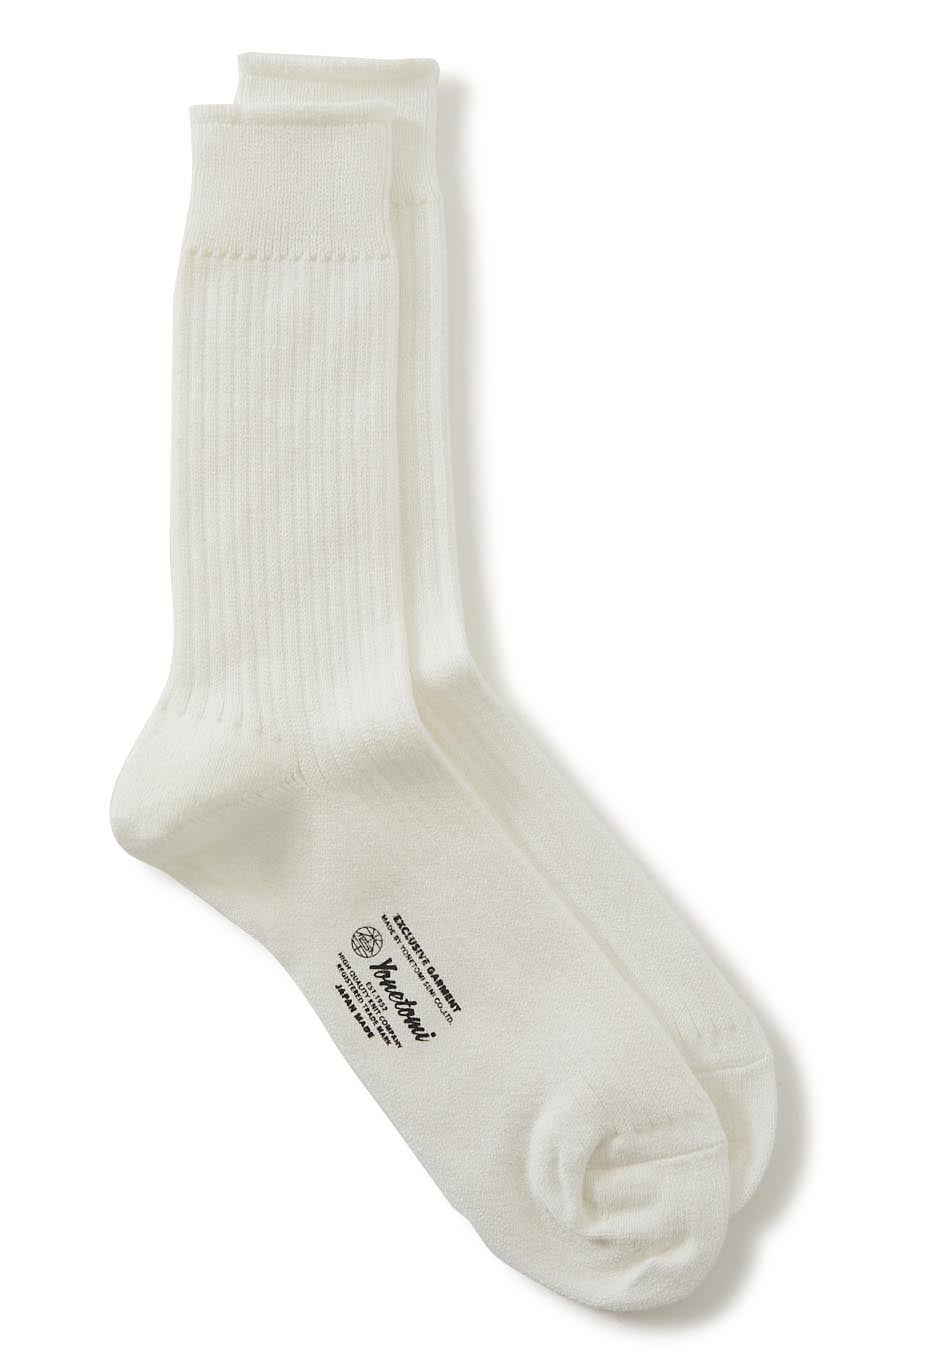 YONETOMI New Basic Wave Cotton Rib Socks